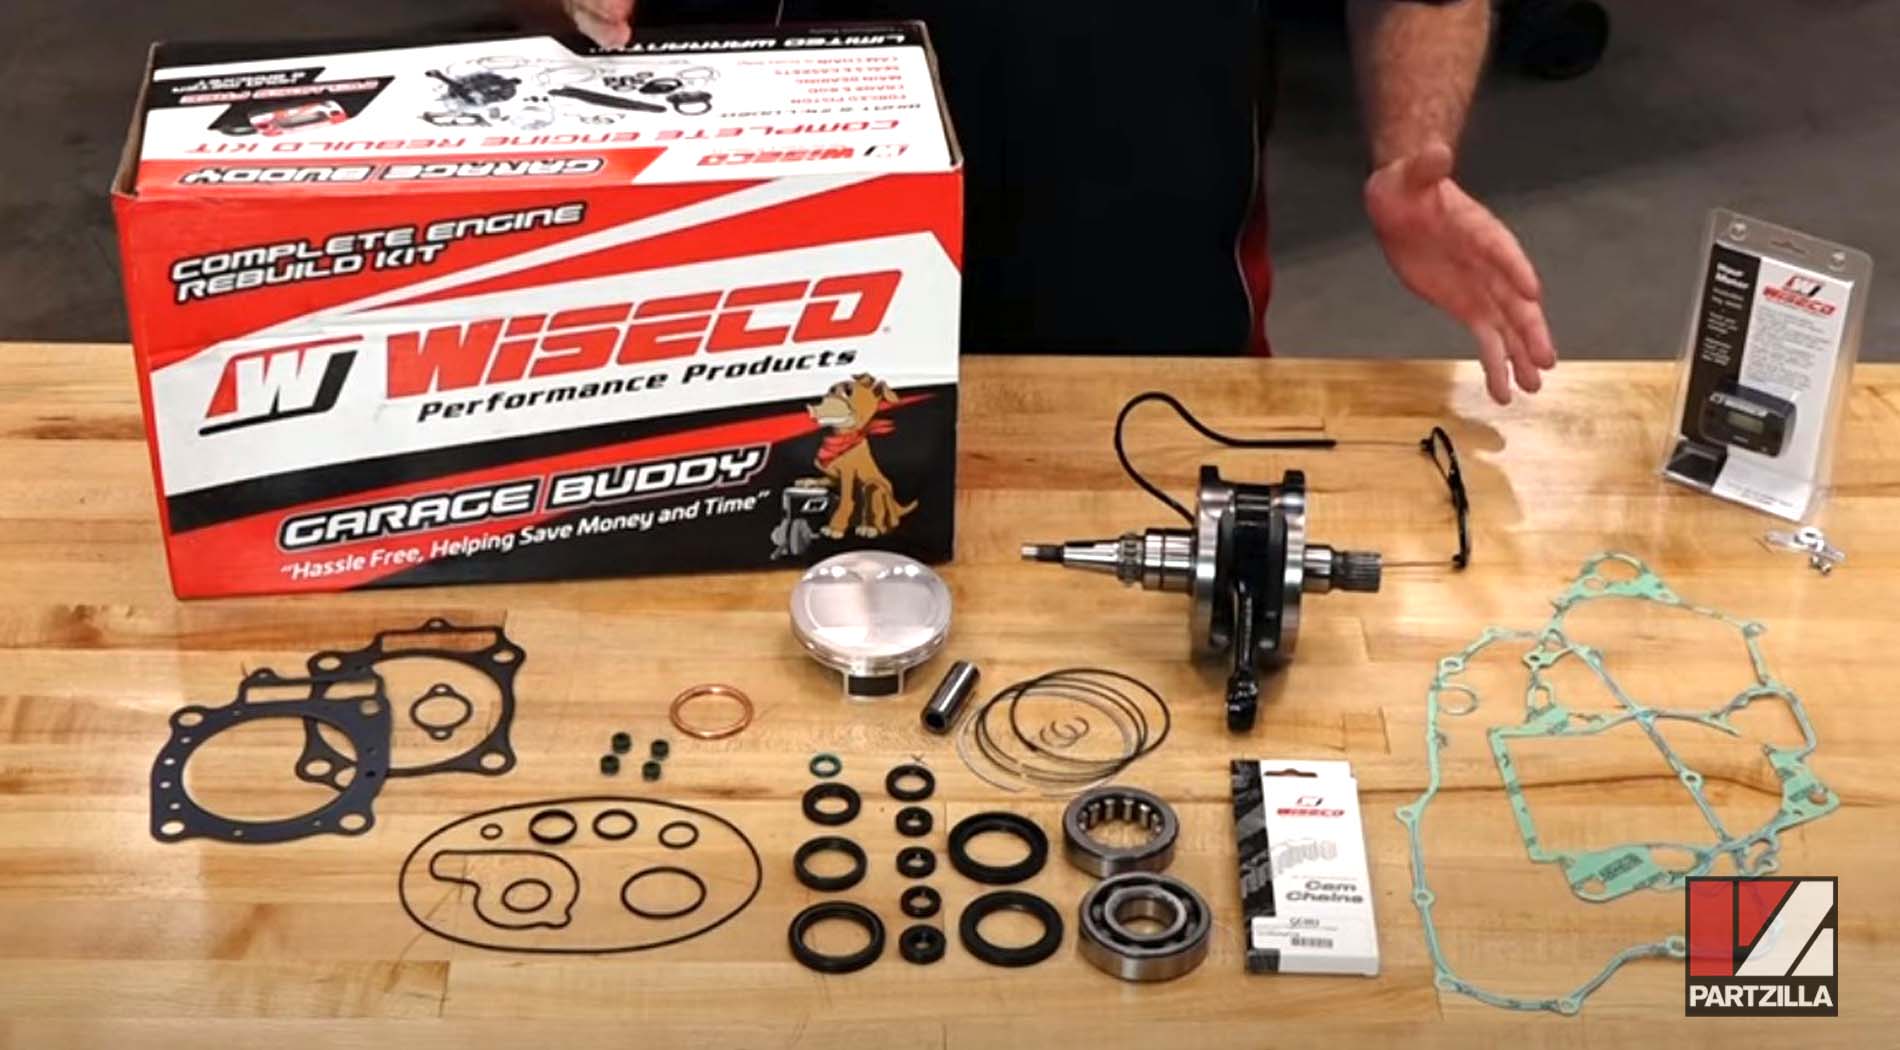 Honda CRF450 engine rebuild Wiseco Garage Buddy